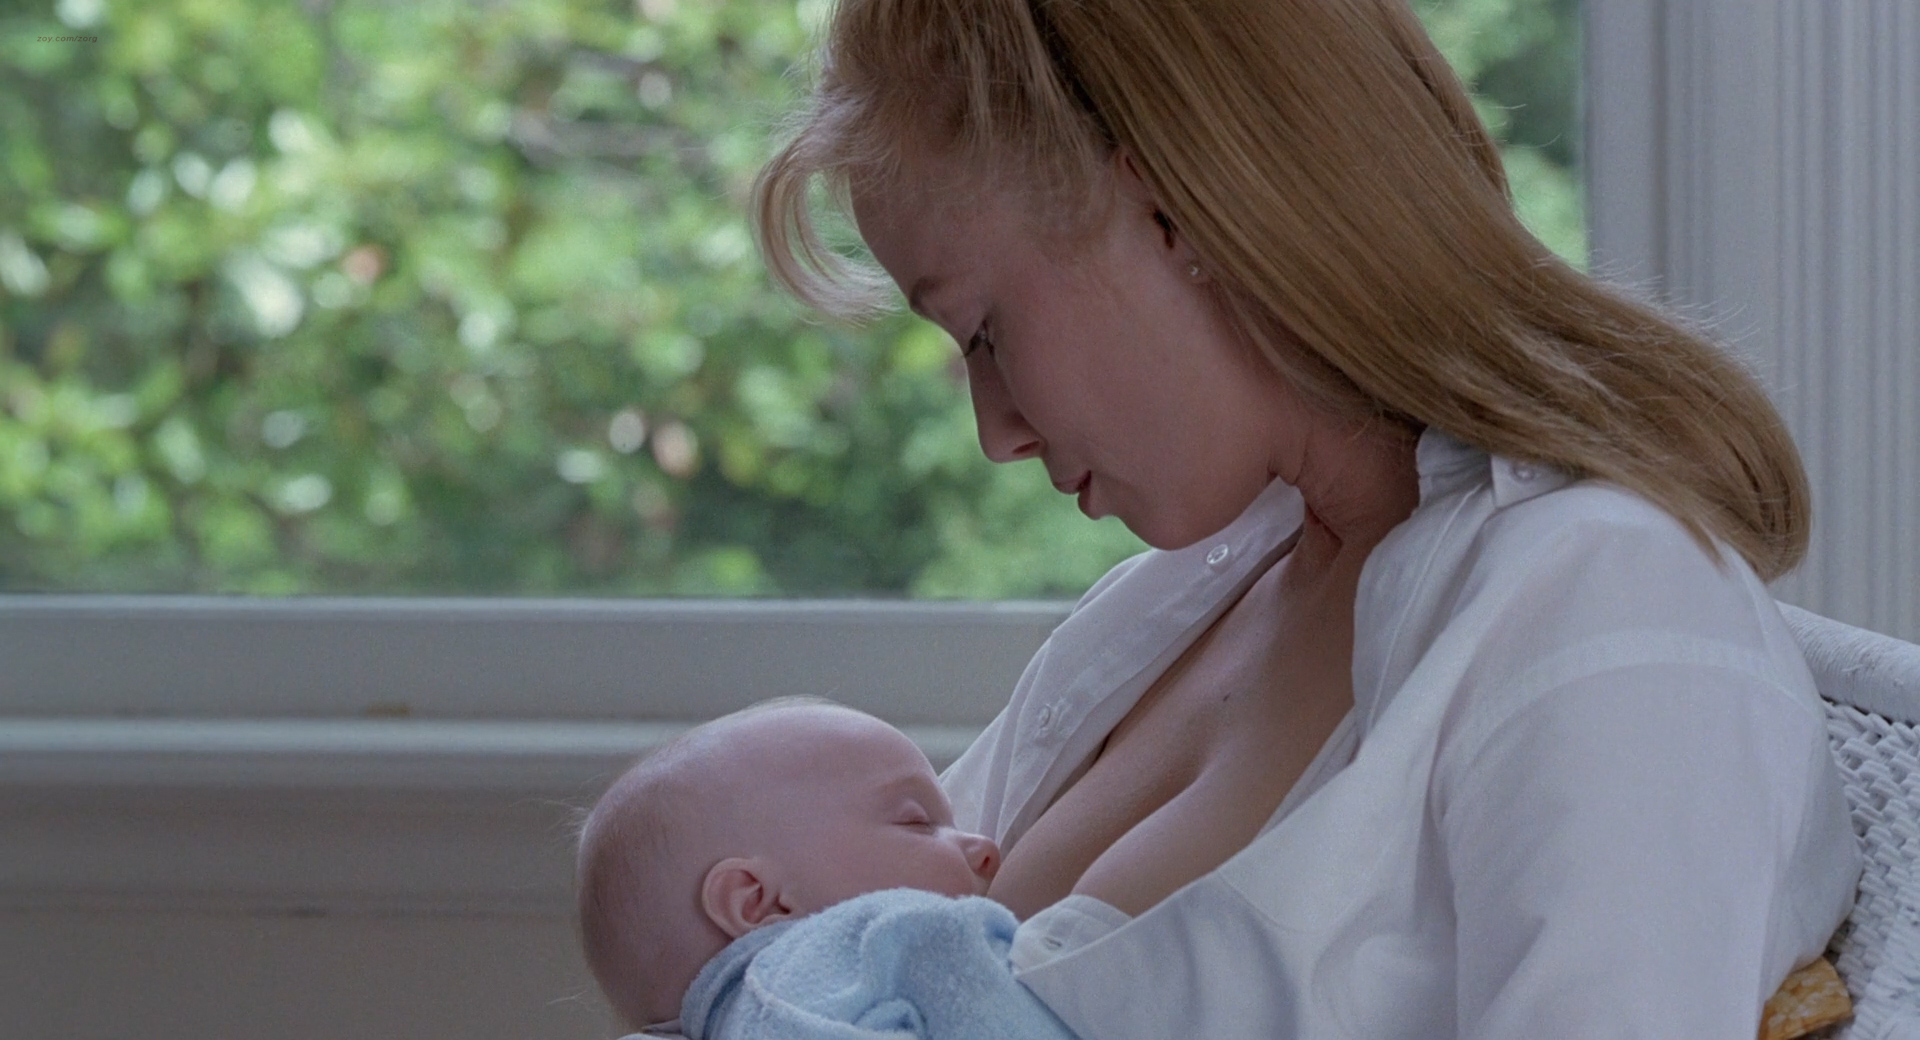 Hangover breastfeeding scene